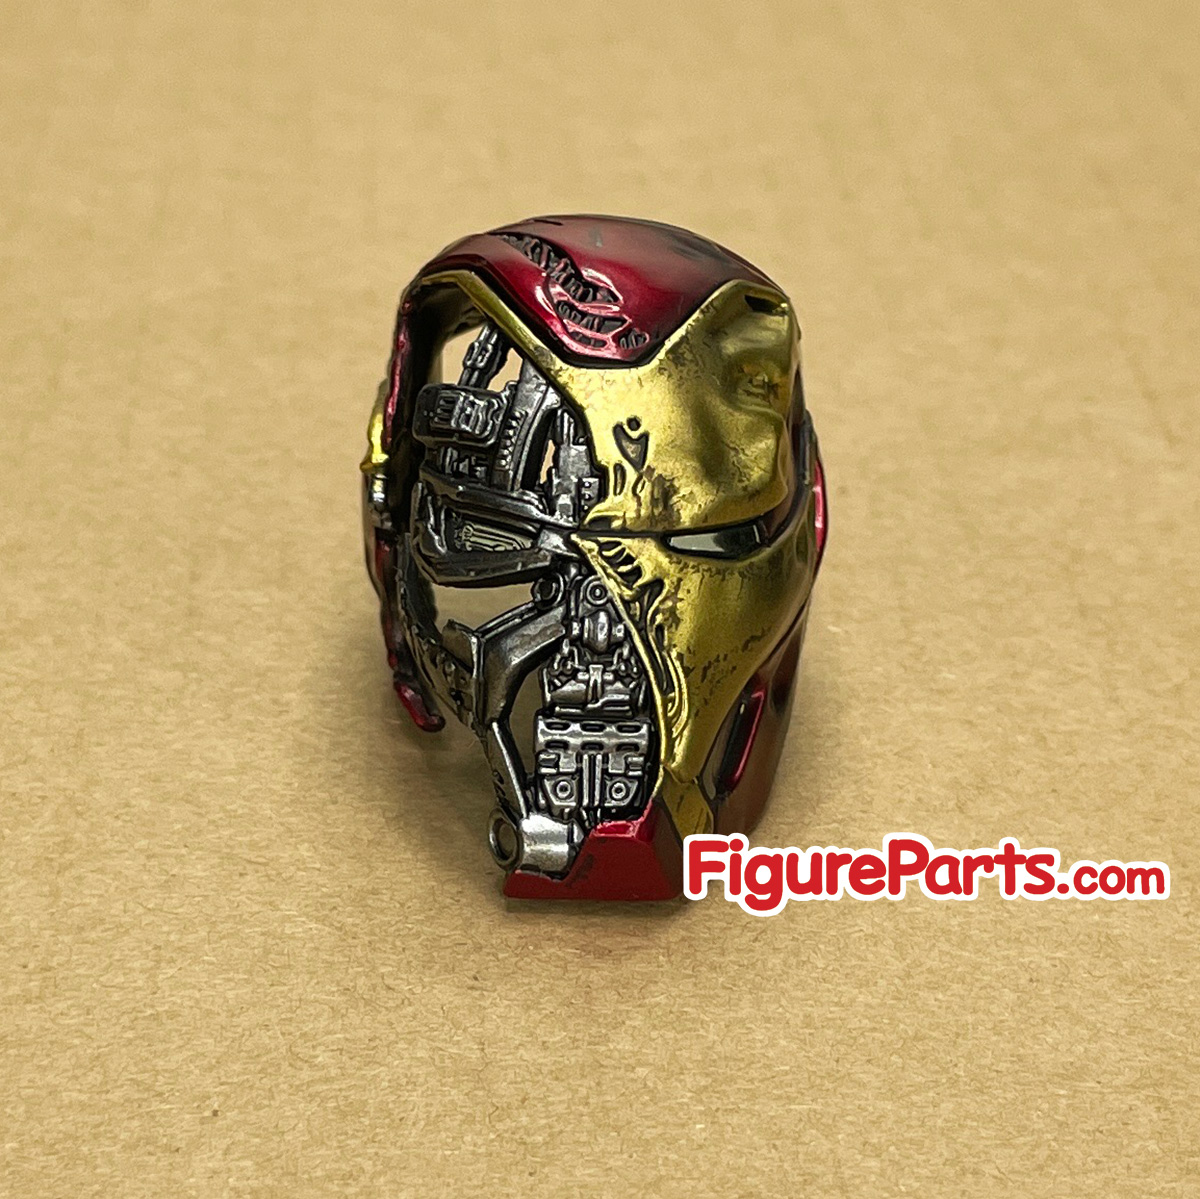 Damaged Iron Man Mark L Head - Tony Stark Team Suit - Avengers Endgame - Hot Toys mms537